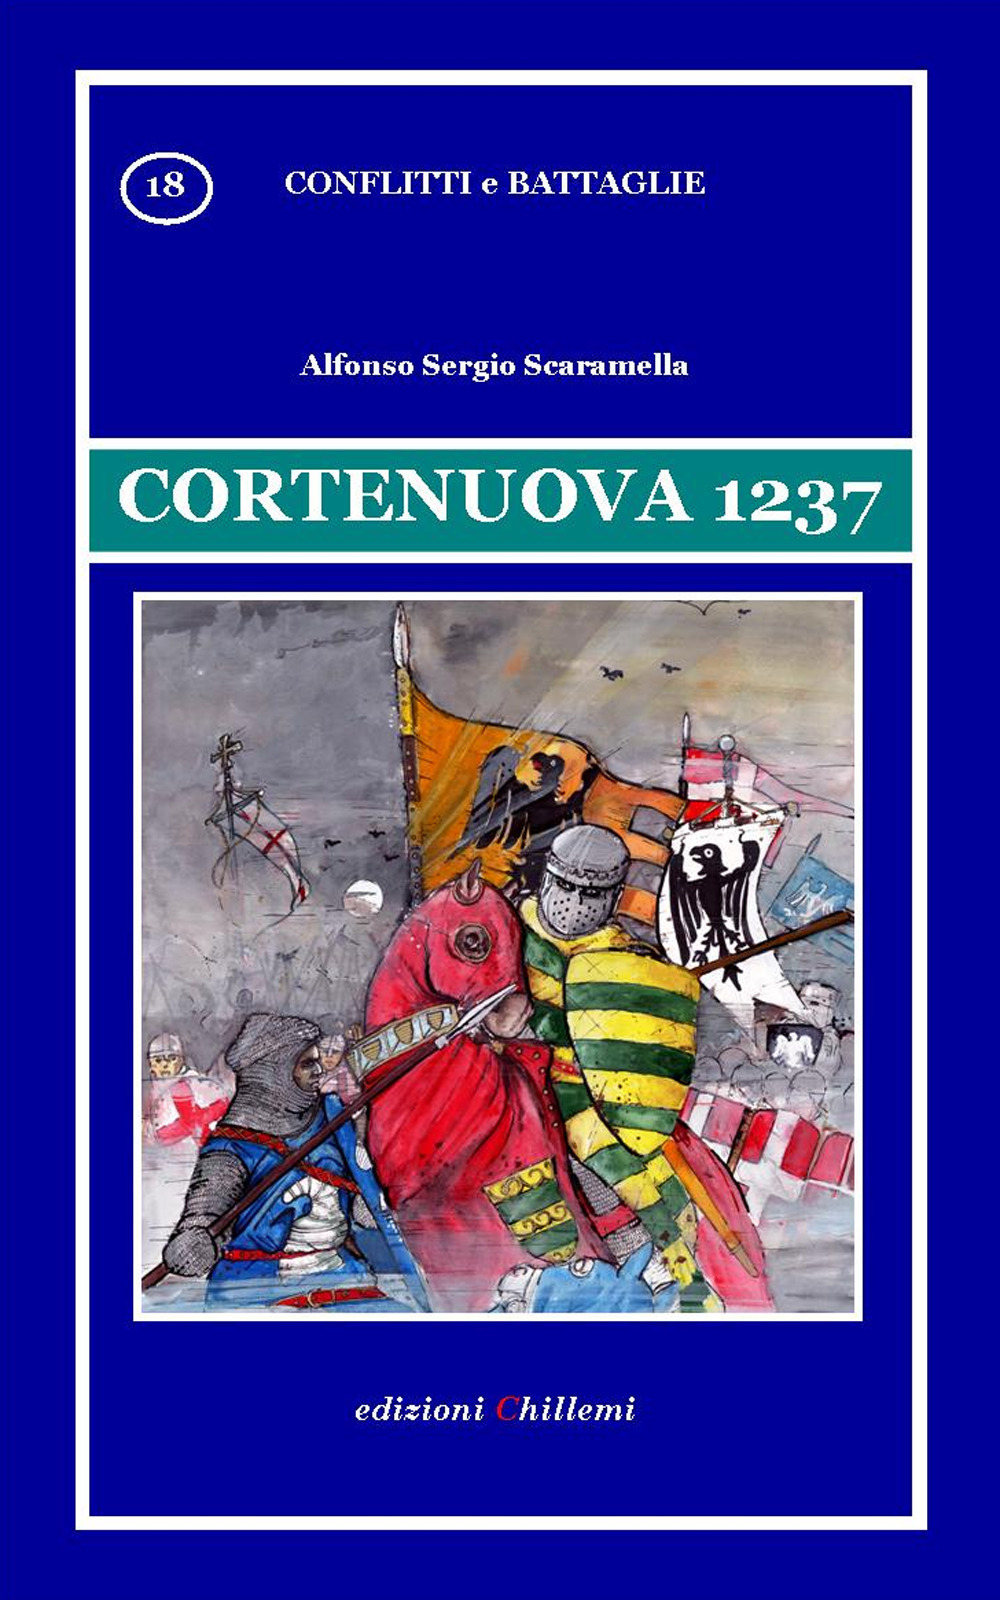 Cortenuova 1237